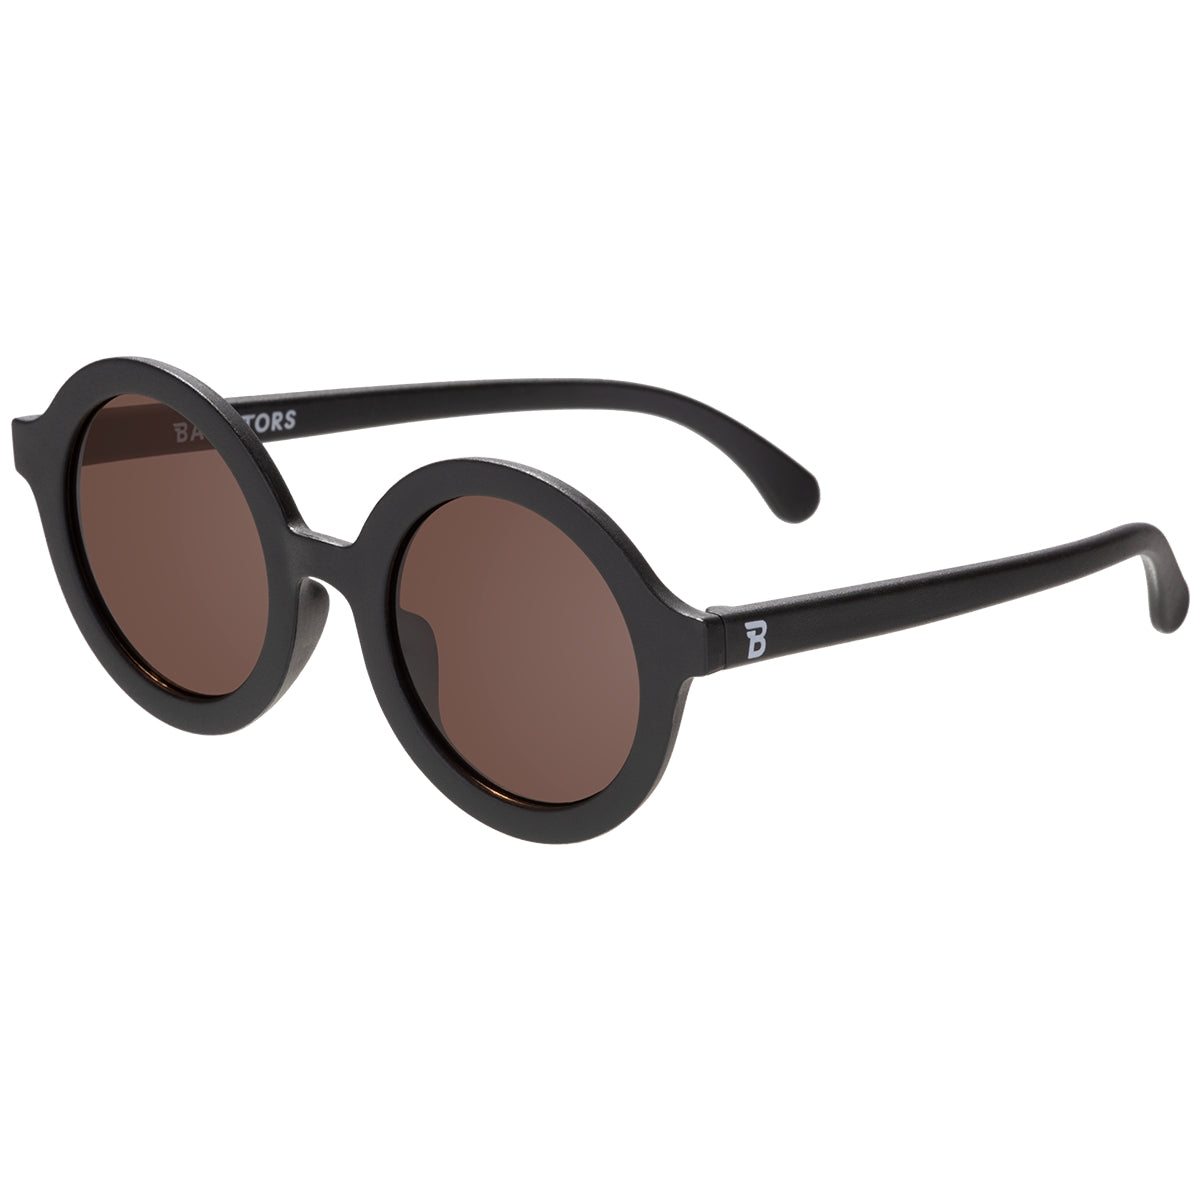 Euro Round Sunglasses | Jet Black with Amber Lenses